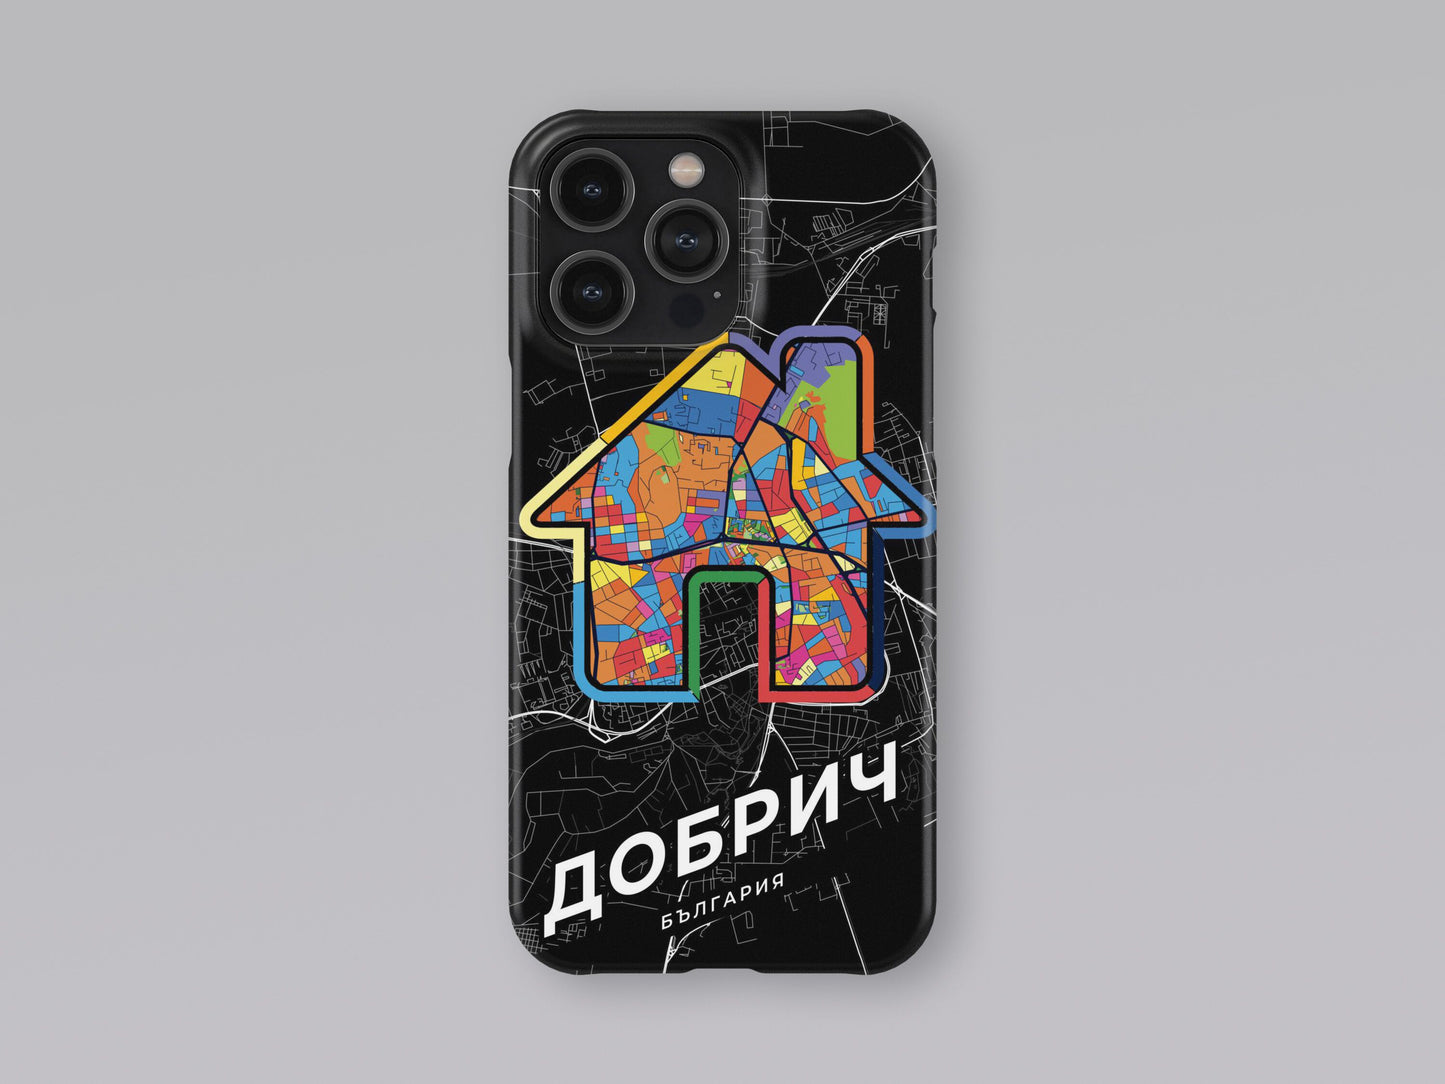 Добрич България slim phone case with colorful icon. Birthday, wedding or housewarming gift. Couple match cases. 3